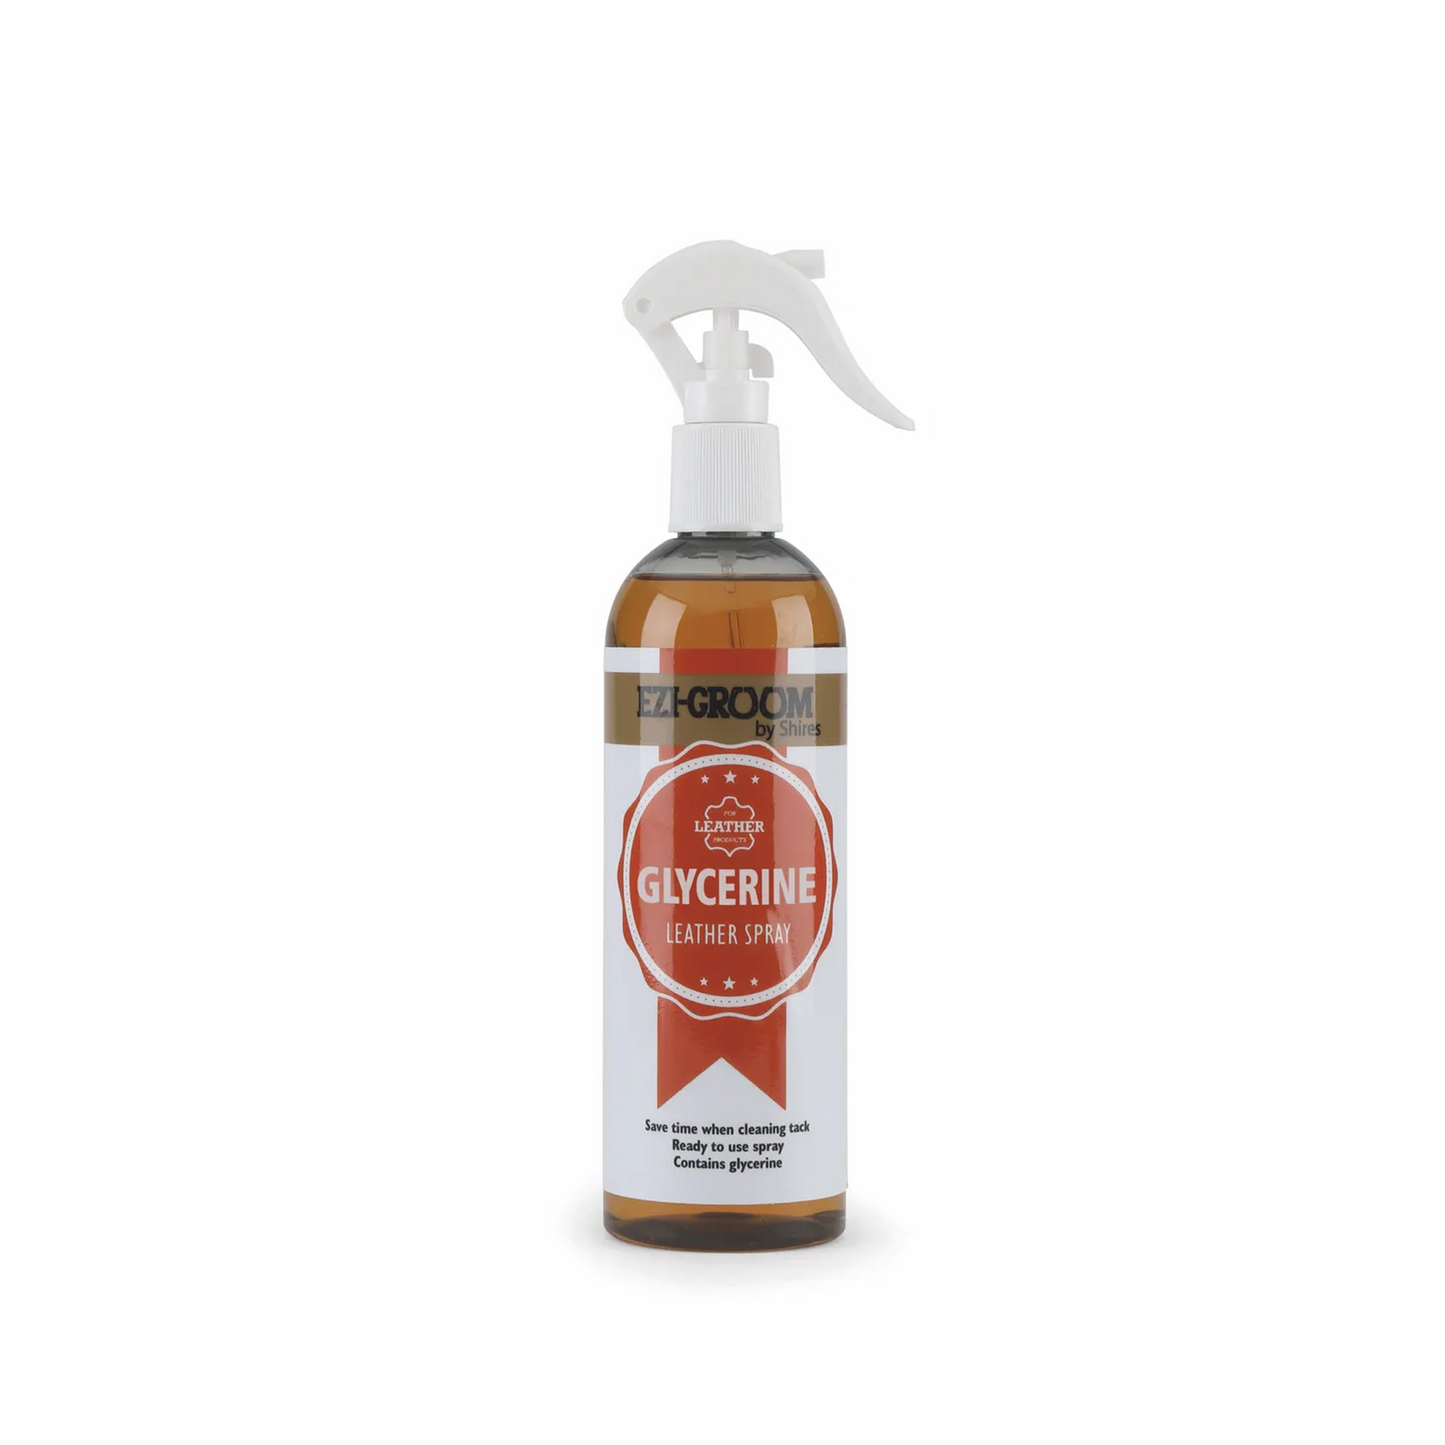 Ezi-Groom Glycerine Leather Spray